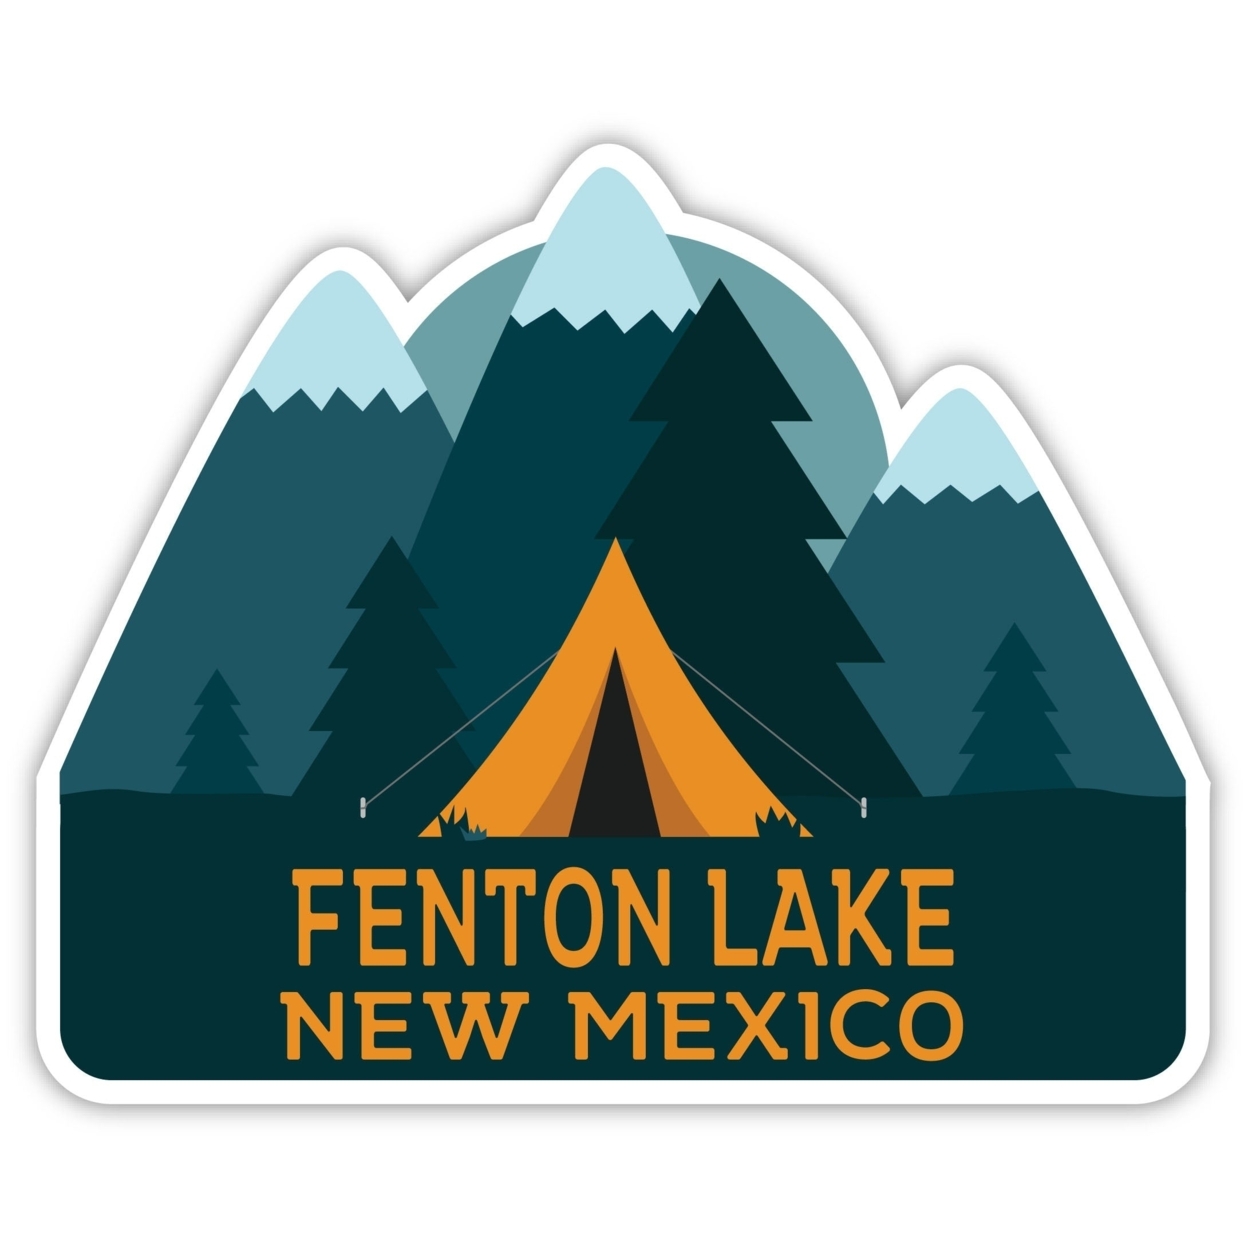 Fenton Lake New Mexico Souvenir Decorative Stickers (Choose Theme And Size) - Single Unit, 6-Inch, Tent